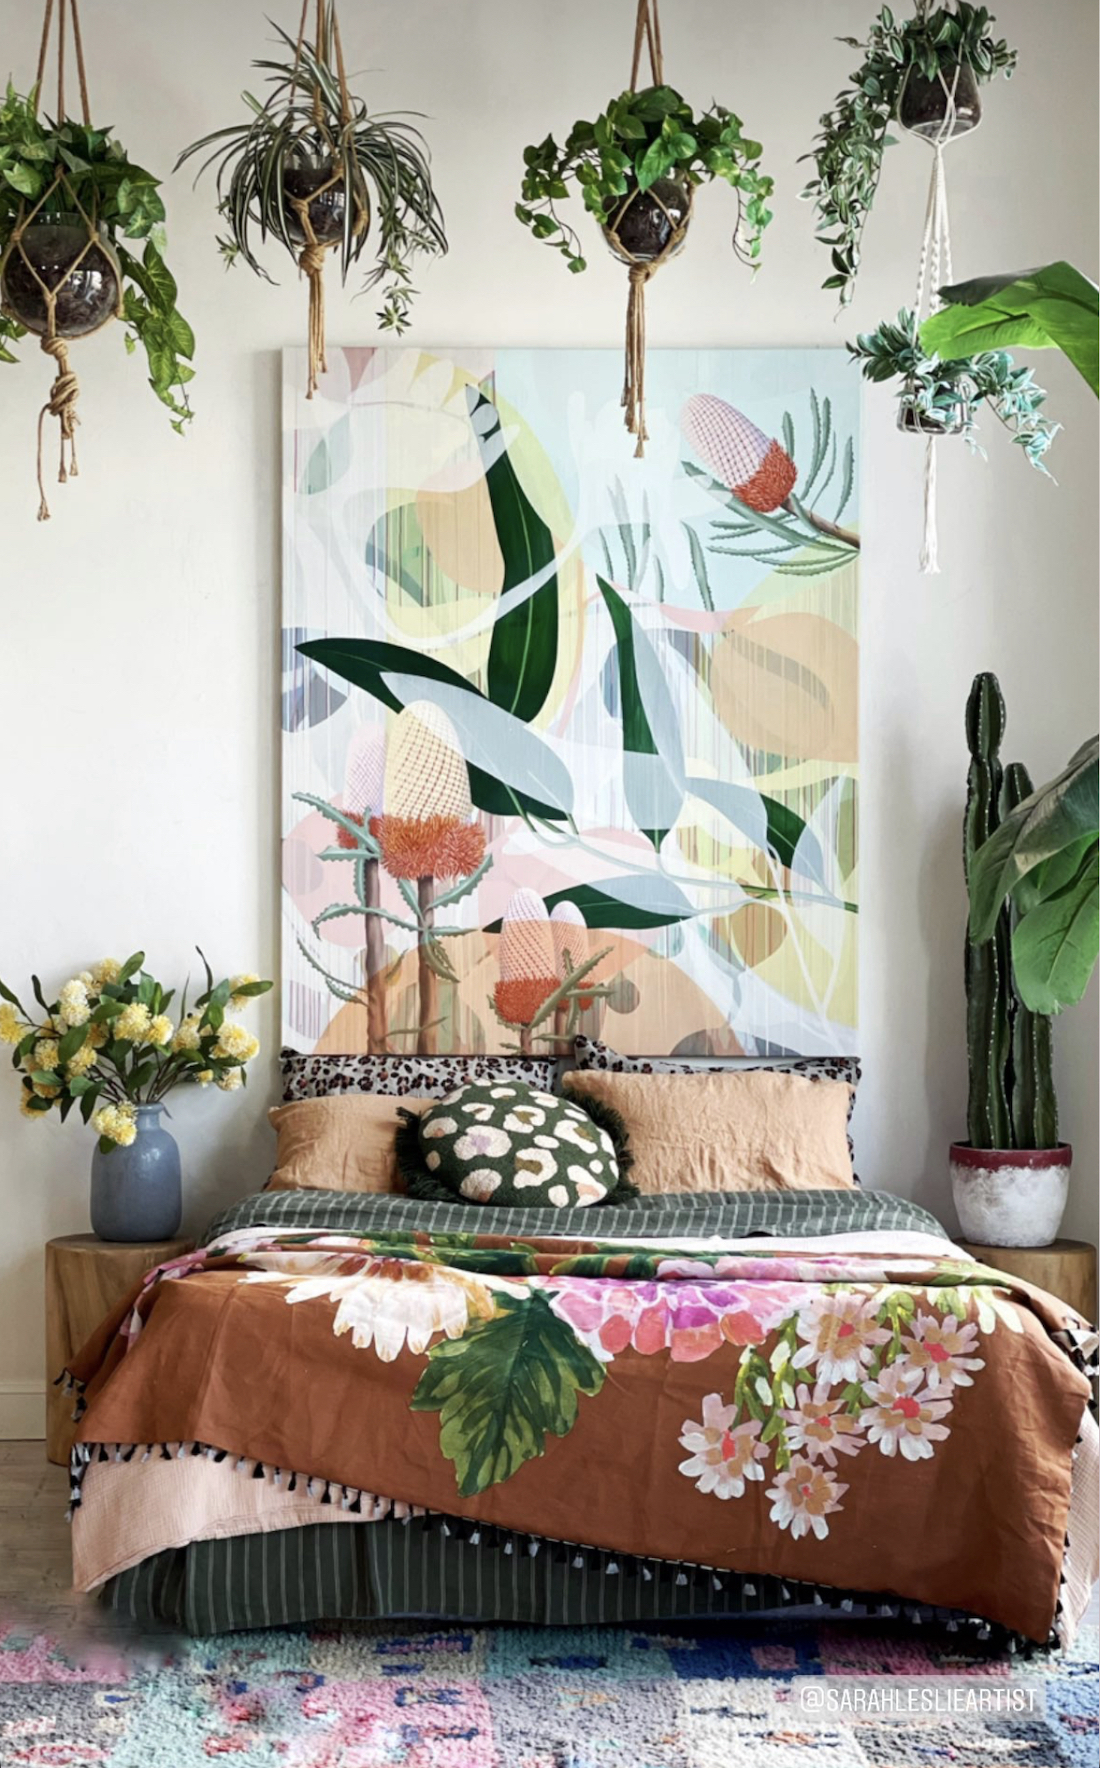 Sarah Leslie artwork above bed with hanging plants